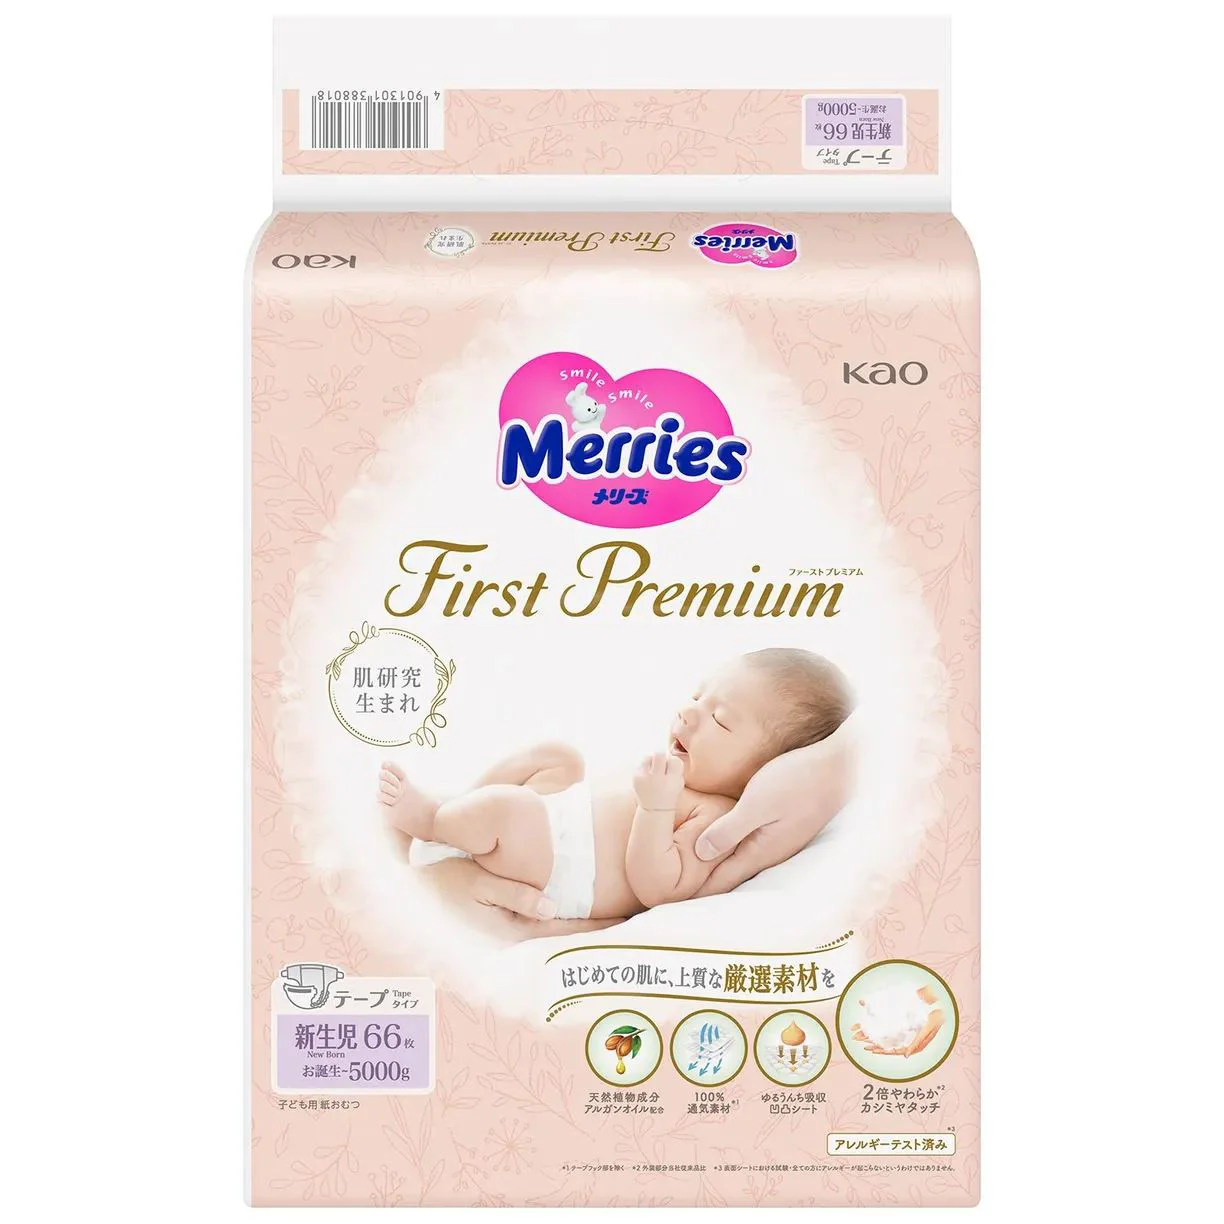 Подгузники Merries First Premium Newborn (<5 кг), 66 шт.